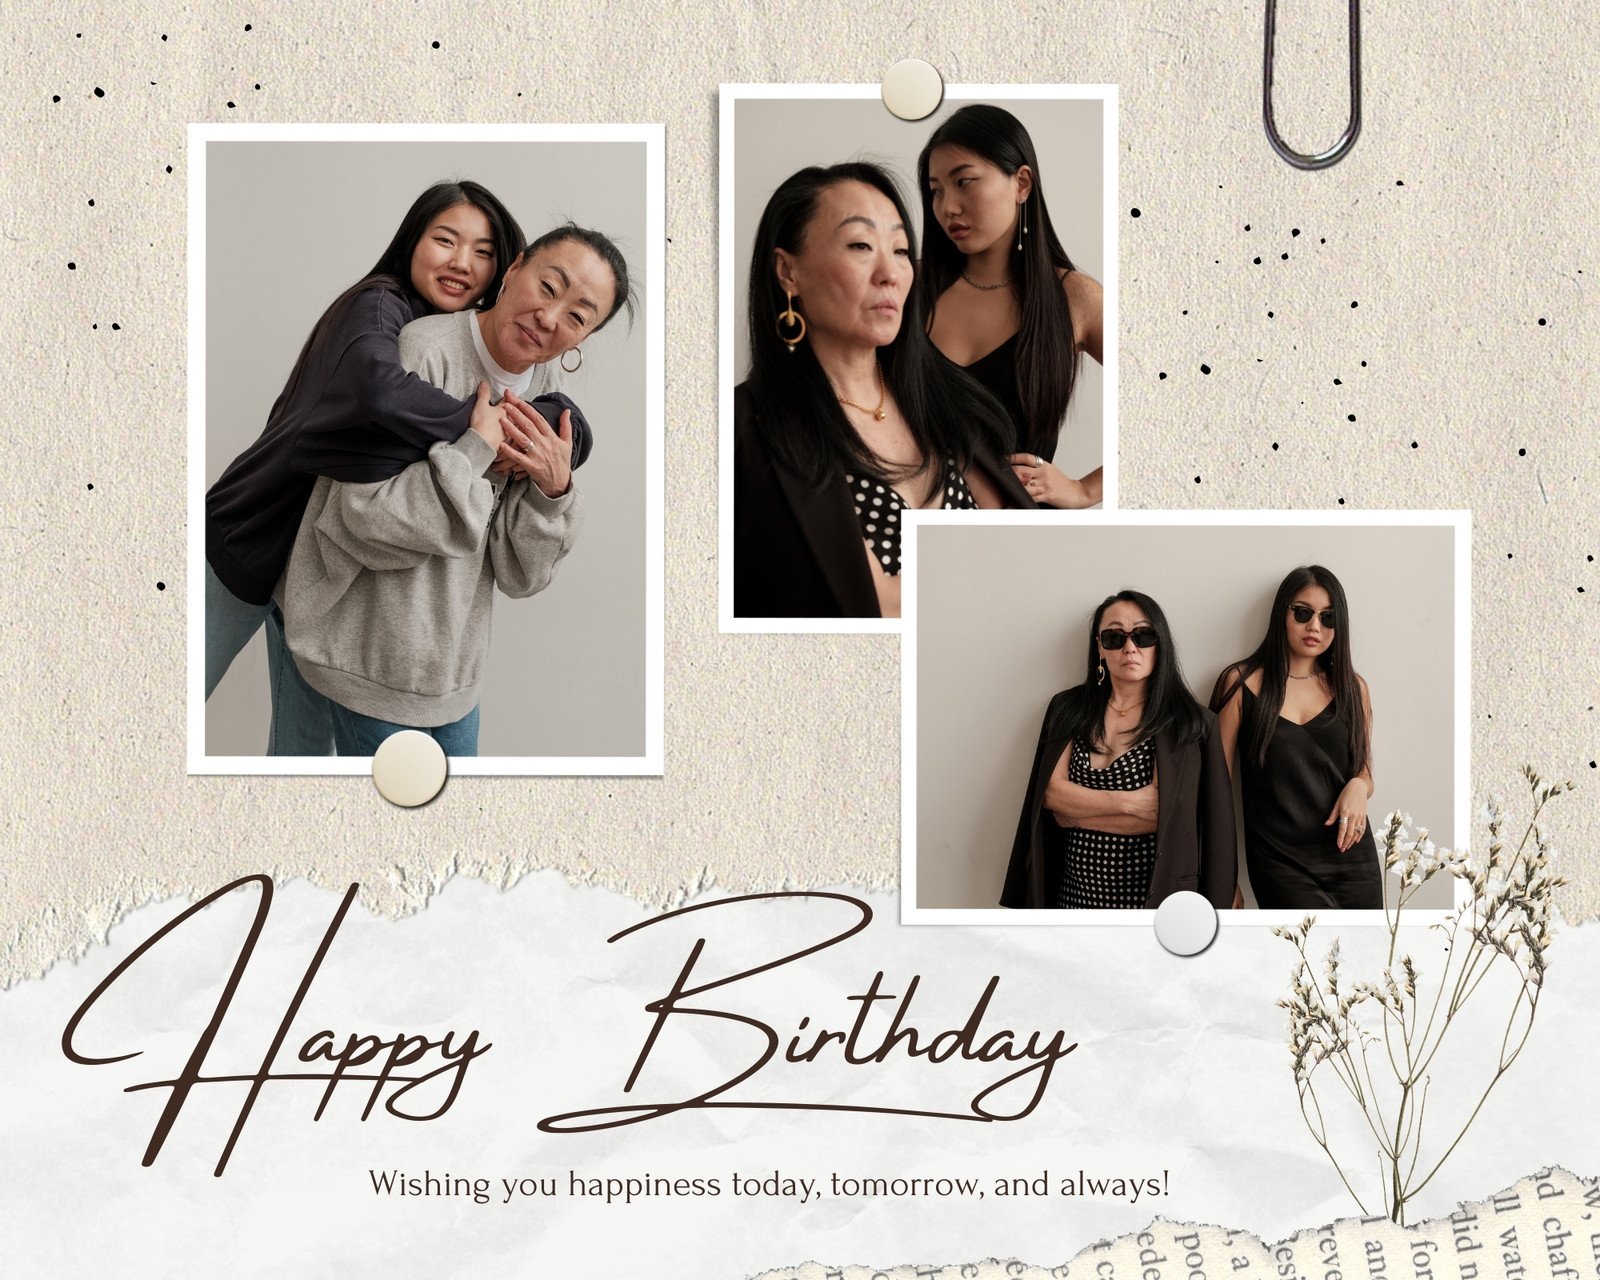 Free, Fun And Customizable Birthday Photo Collage Templates | Canva